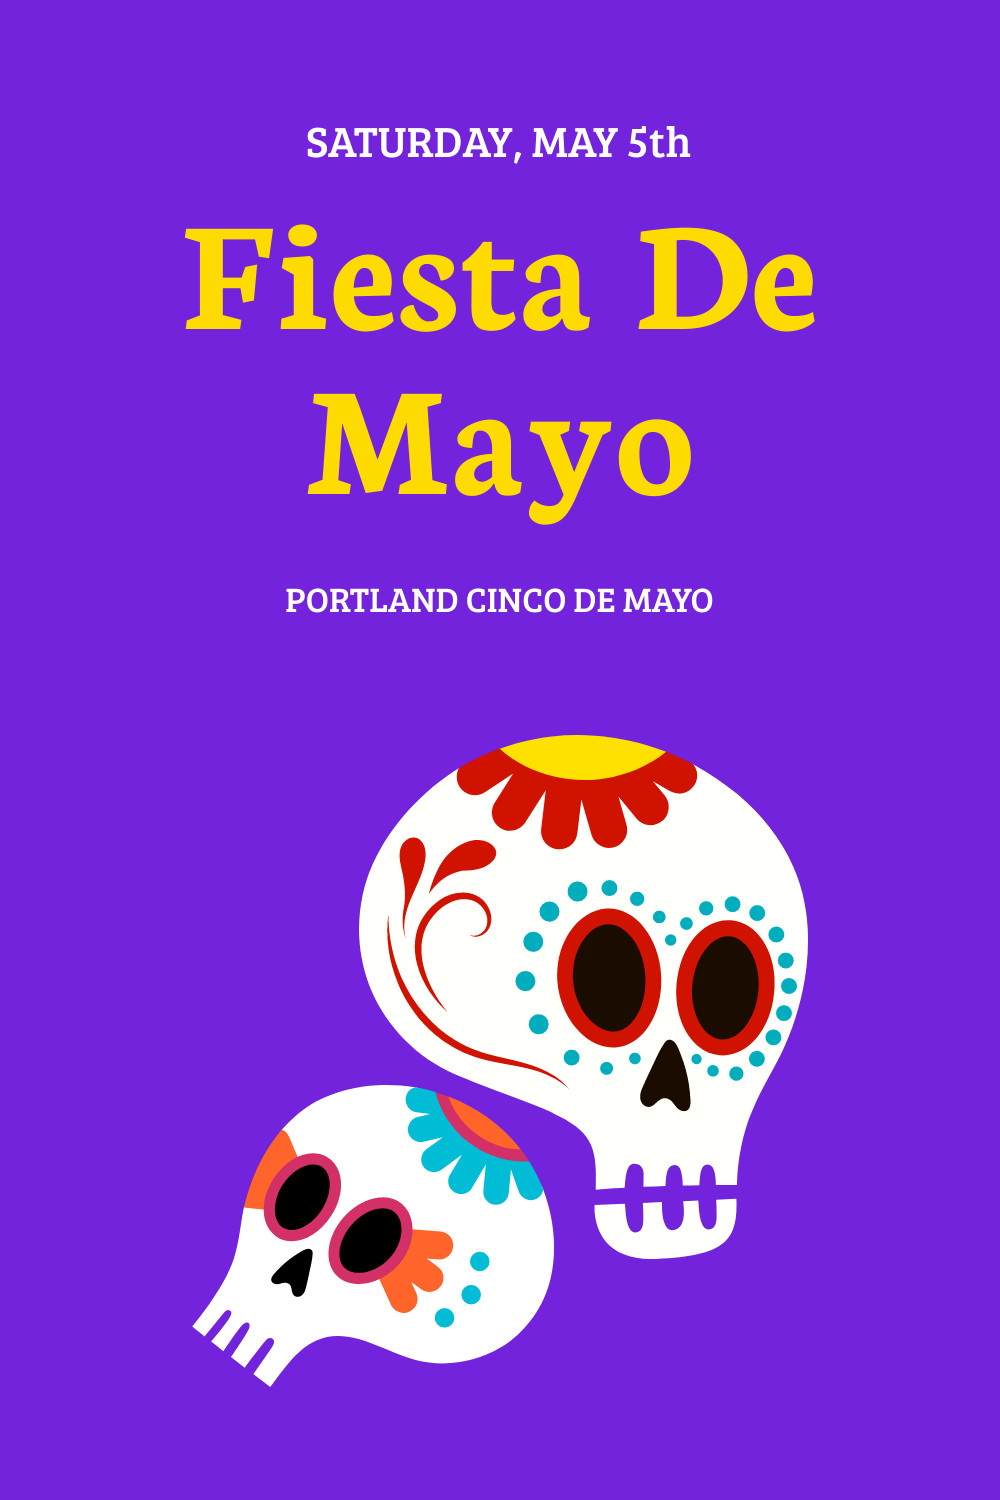 Portland Cinco de Mayo Festival